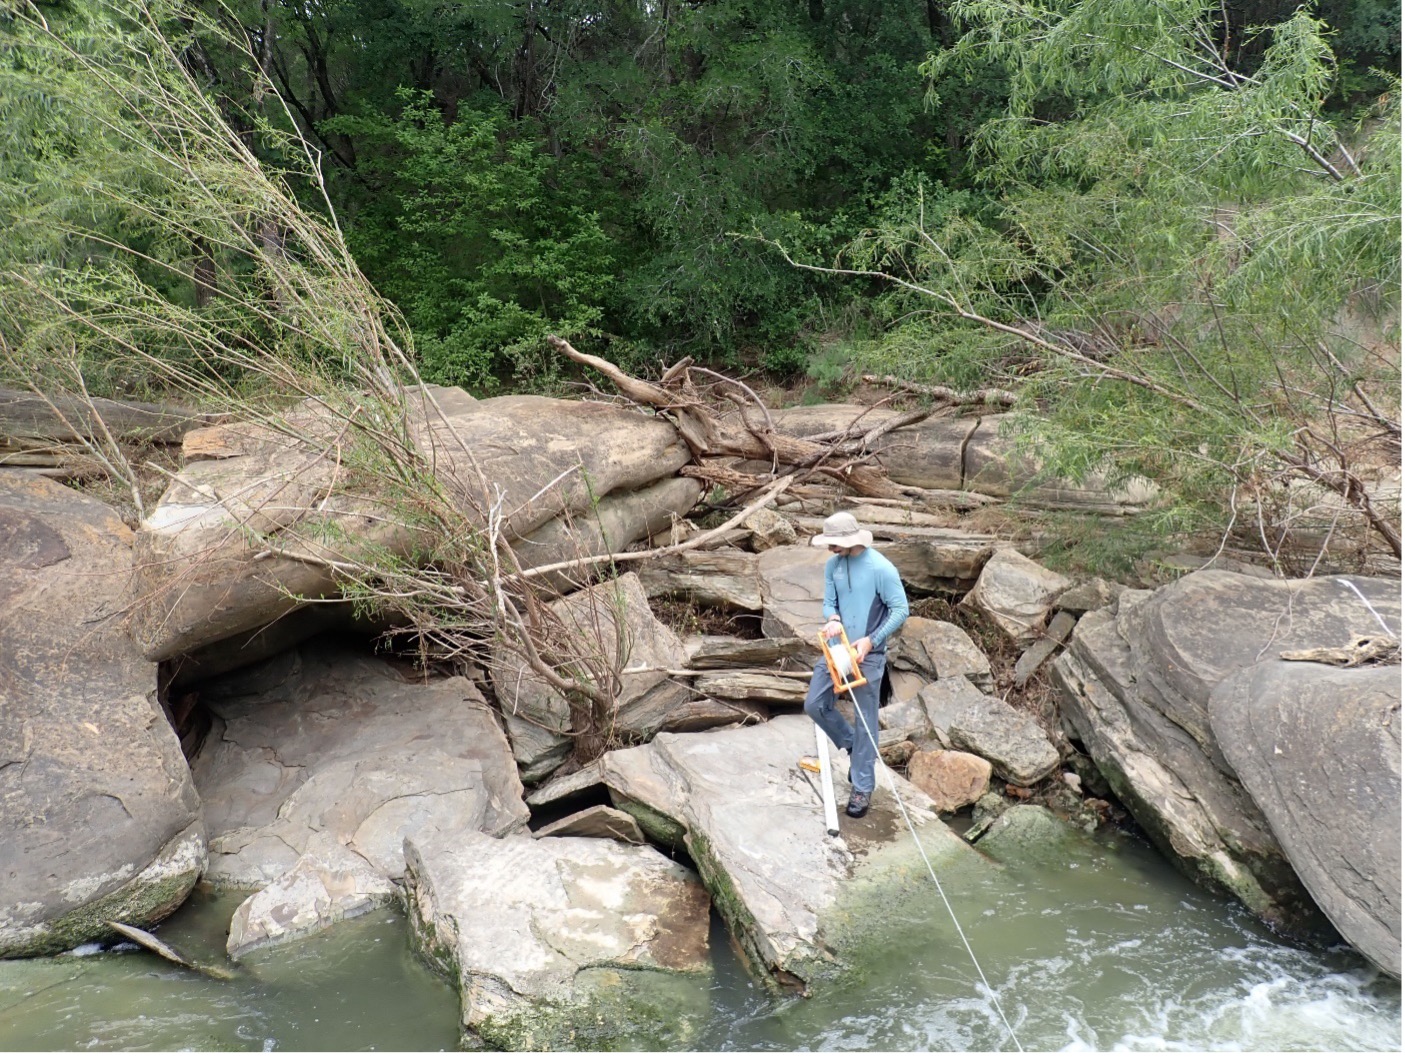 ESD team member Austin Davis collects data at Leon Creek (Site 14198).